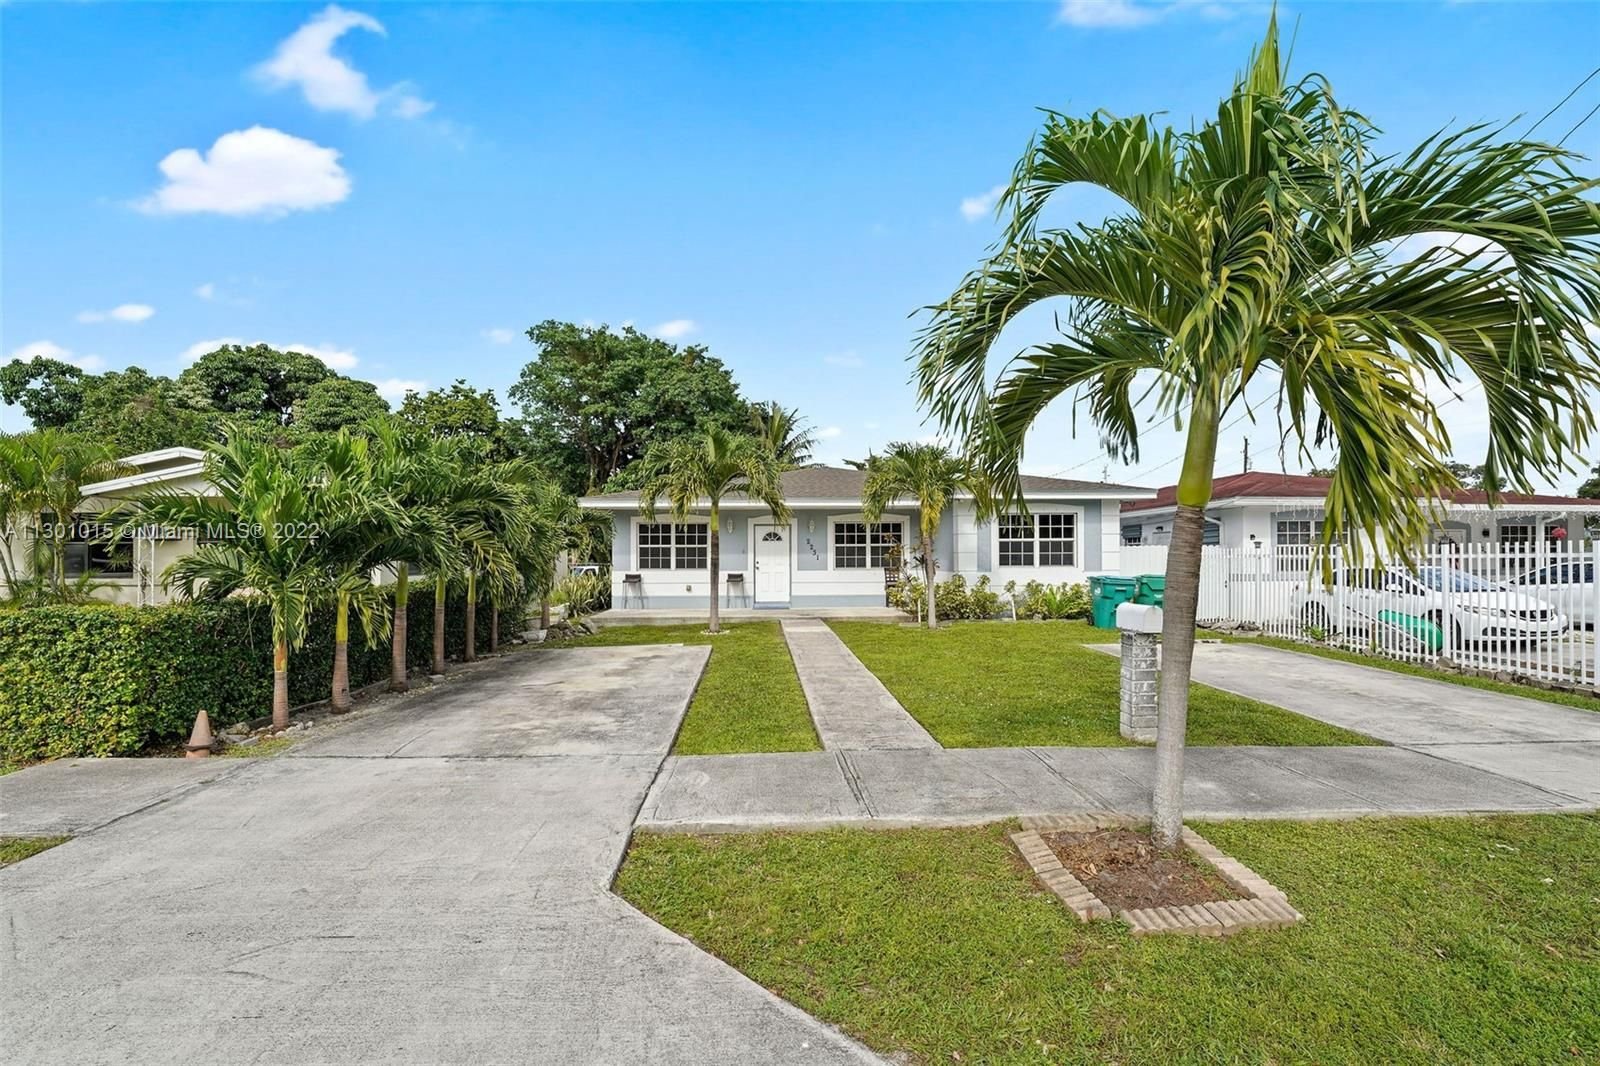 Real estate property located at 2231 60th St, Miami-Dade County, Miami, FL